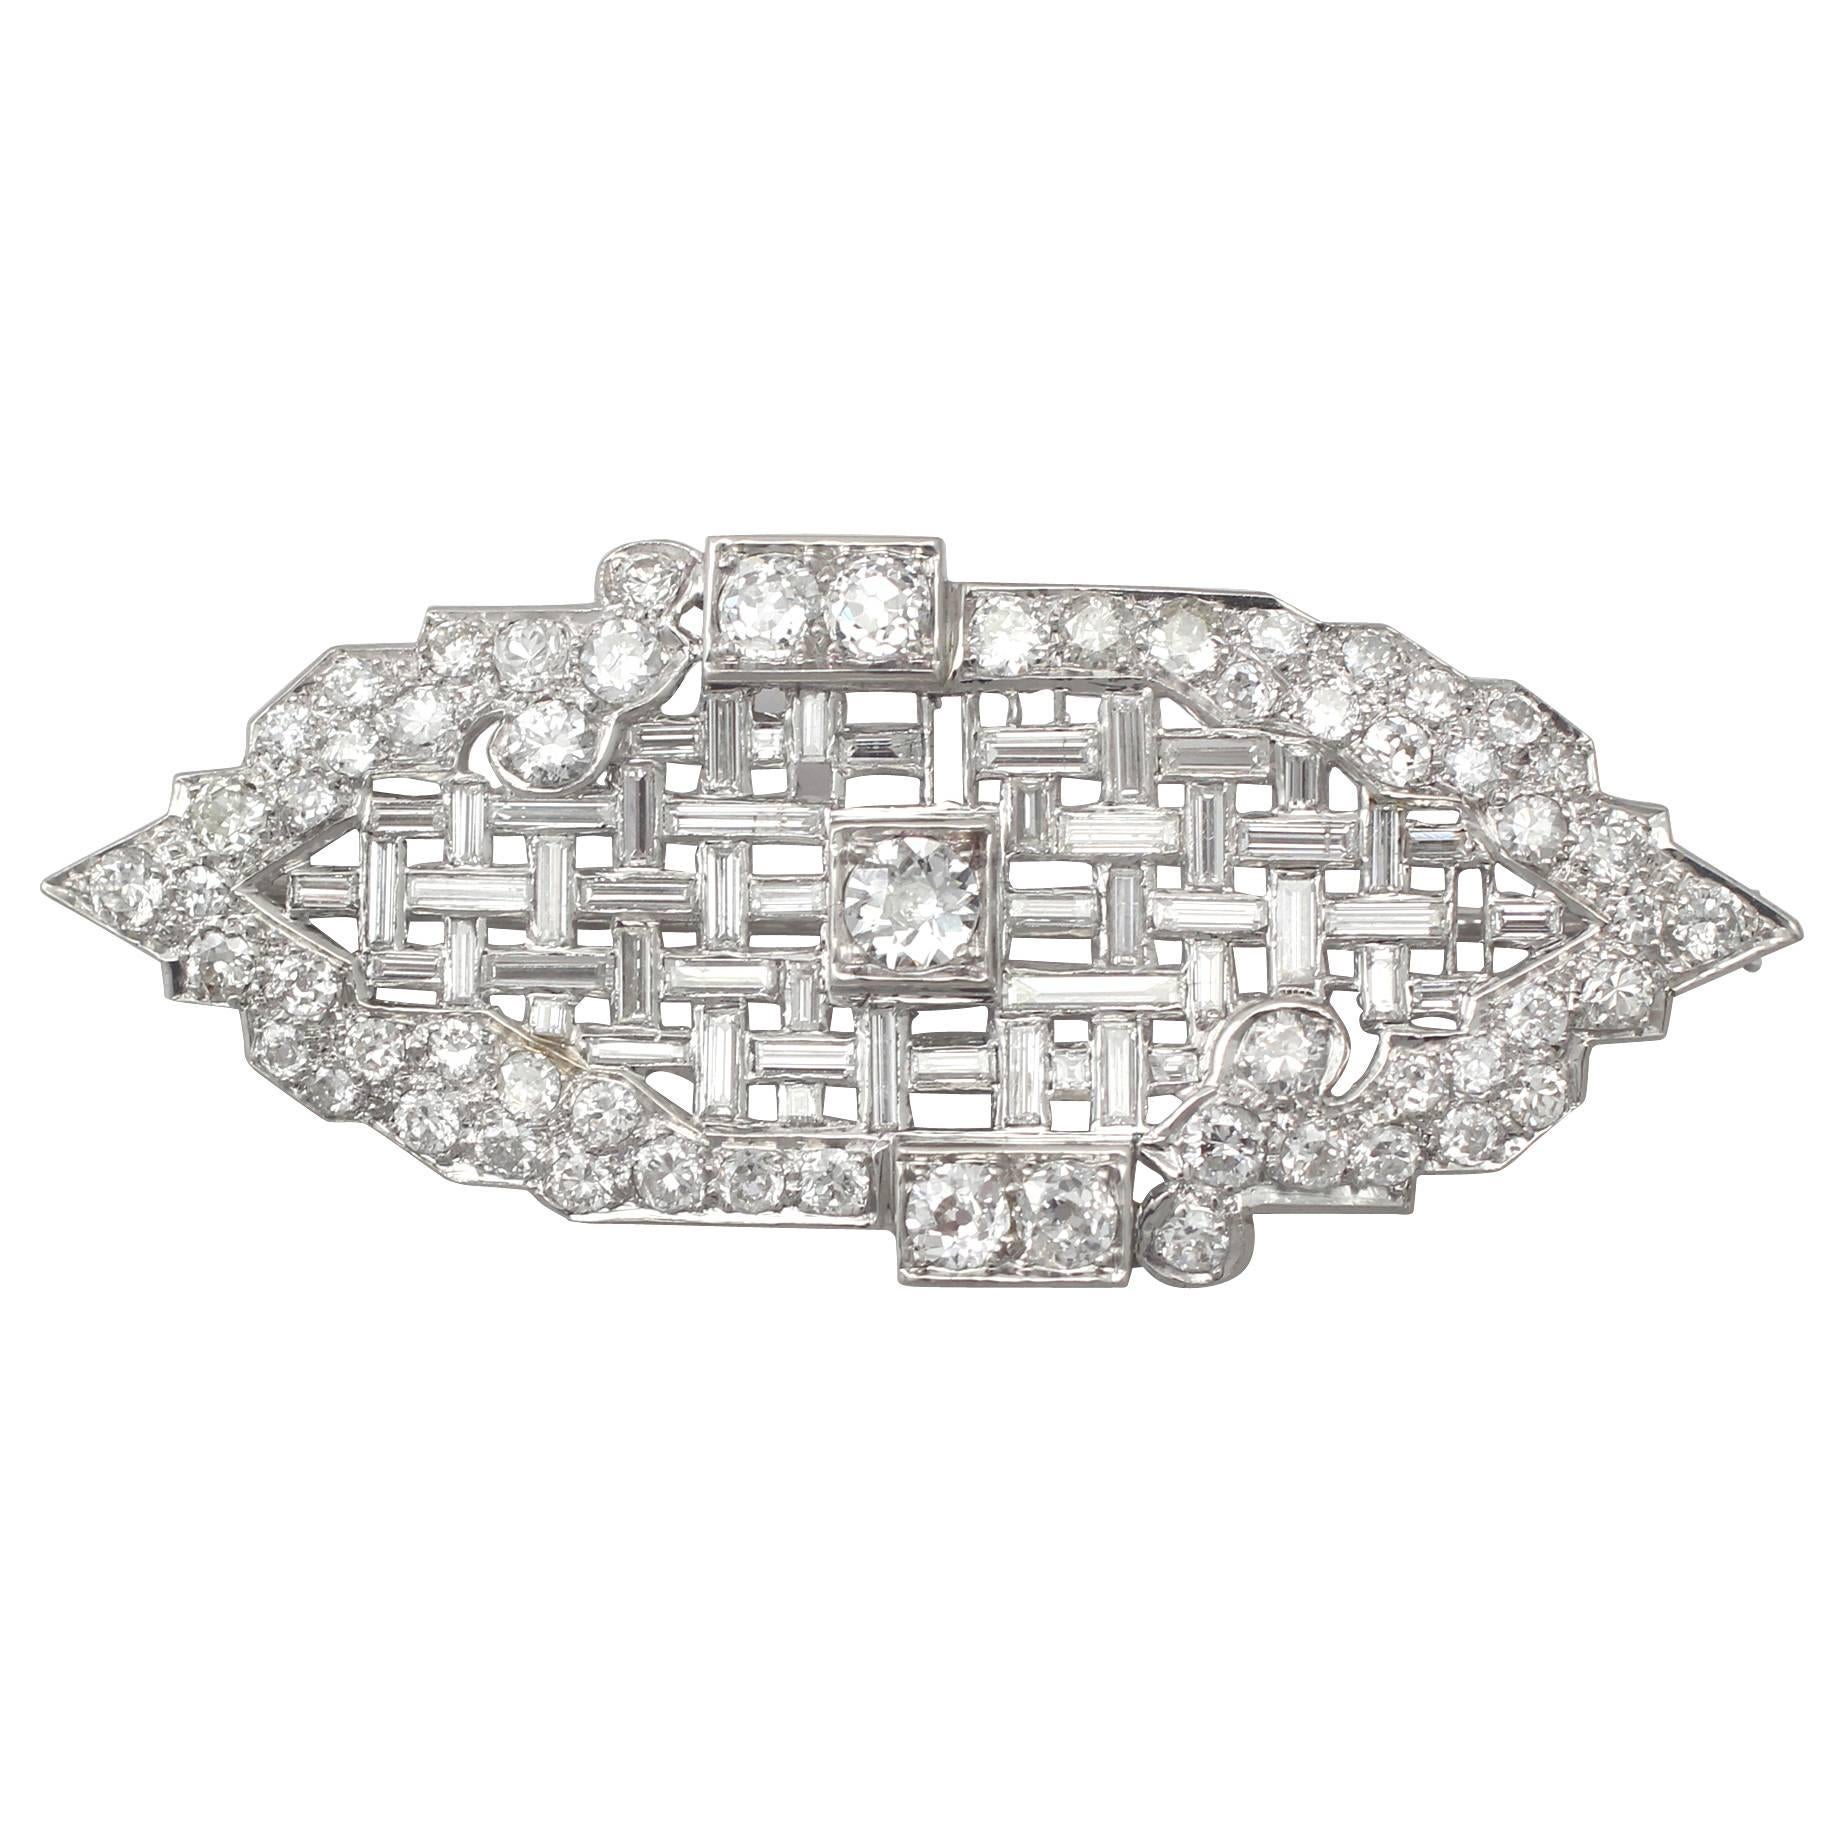 5.83Ct Diamond and Platinum Brooch - Art Deco Style - Antique Circa 1920